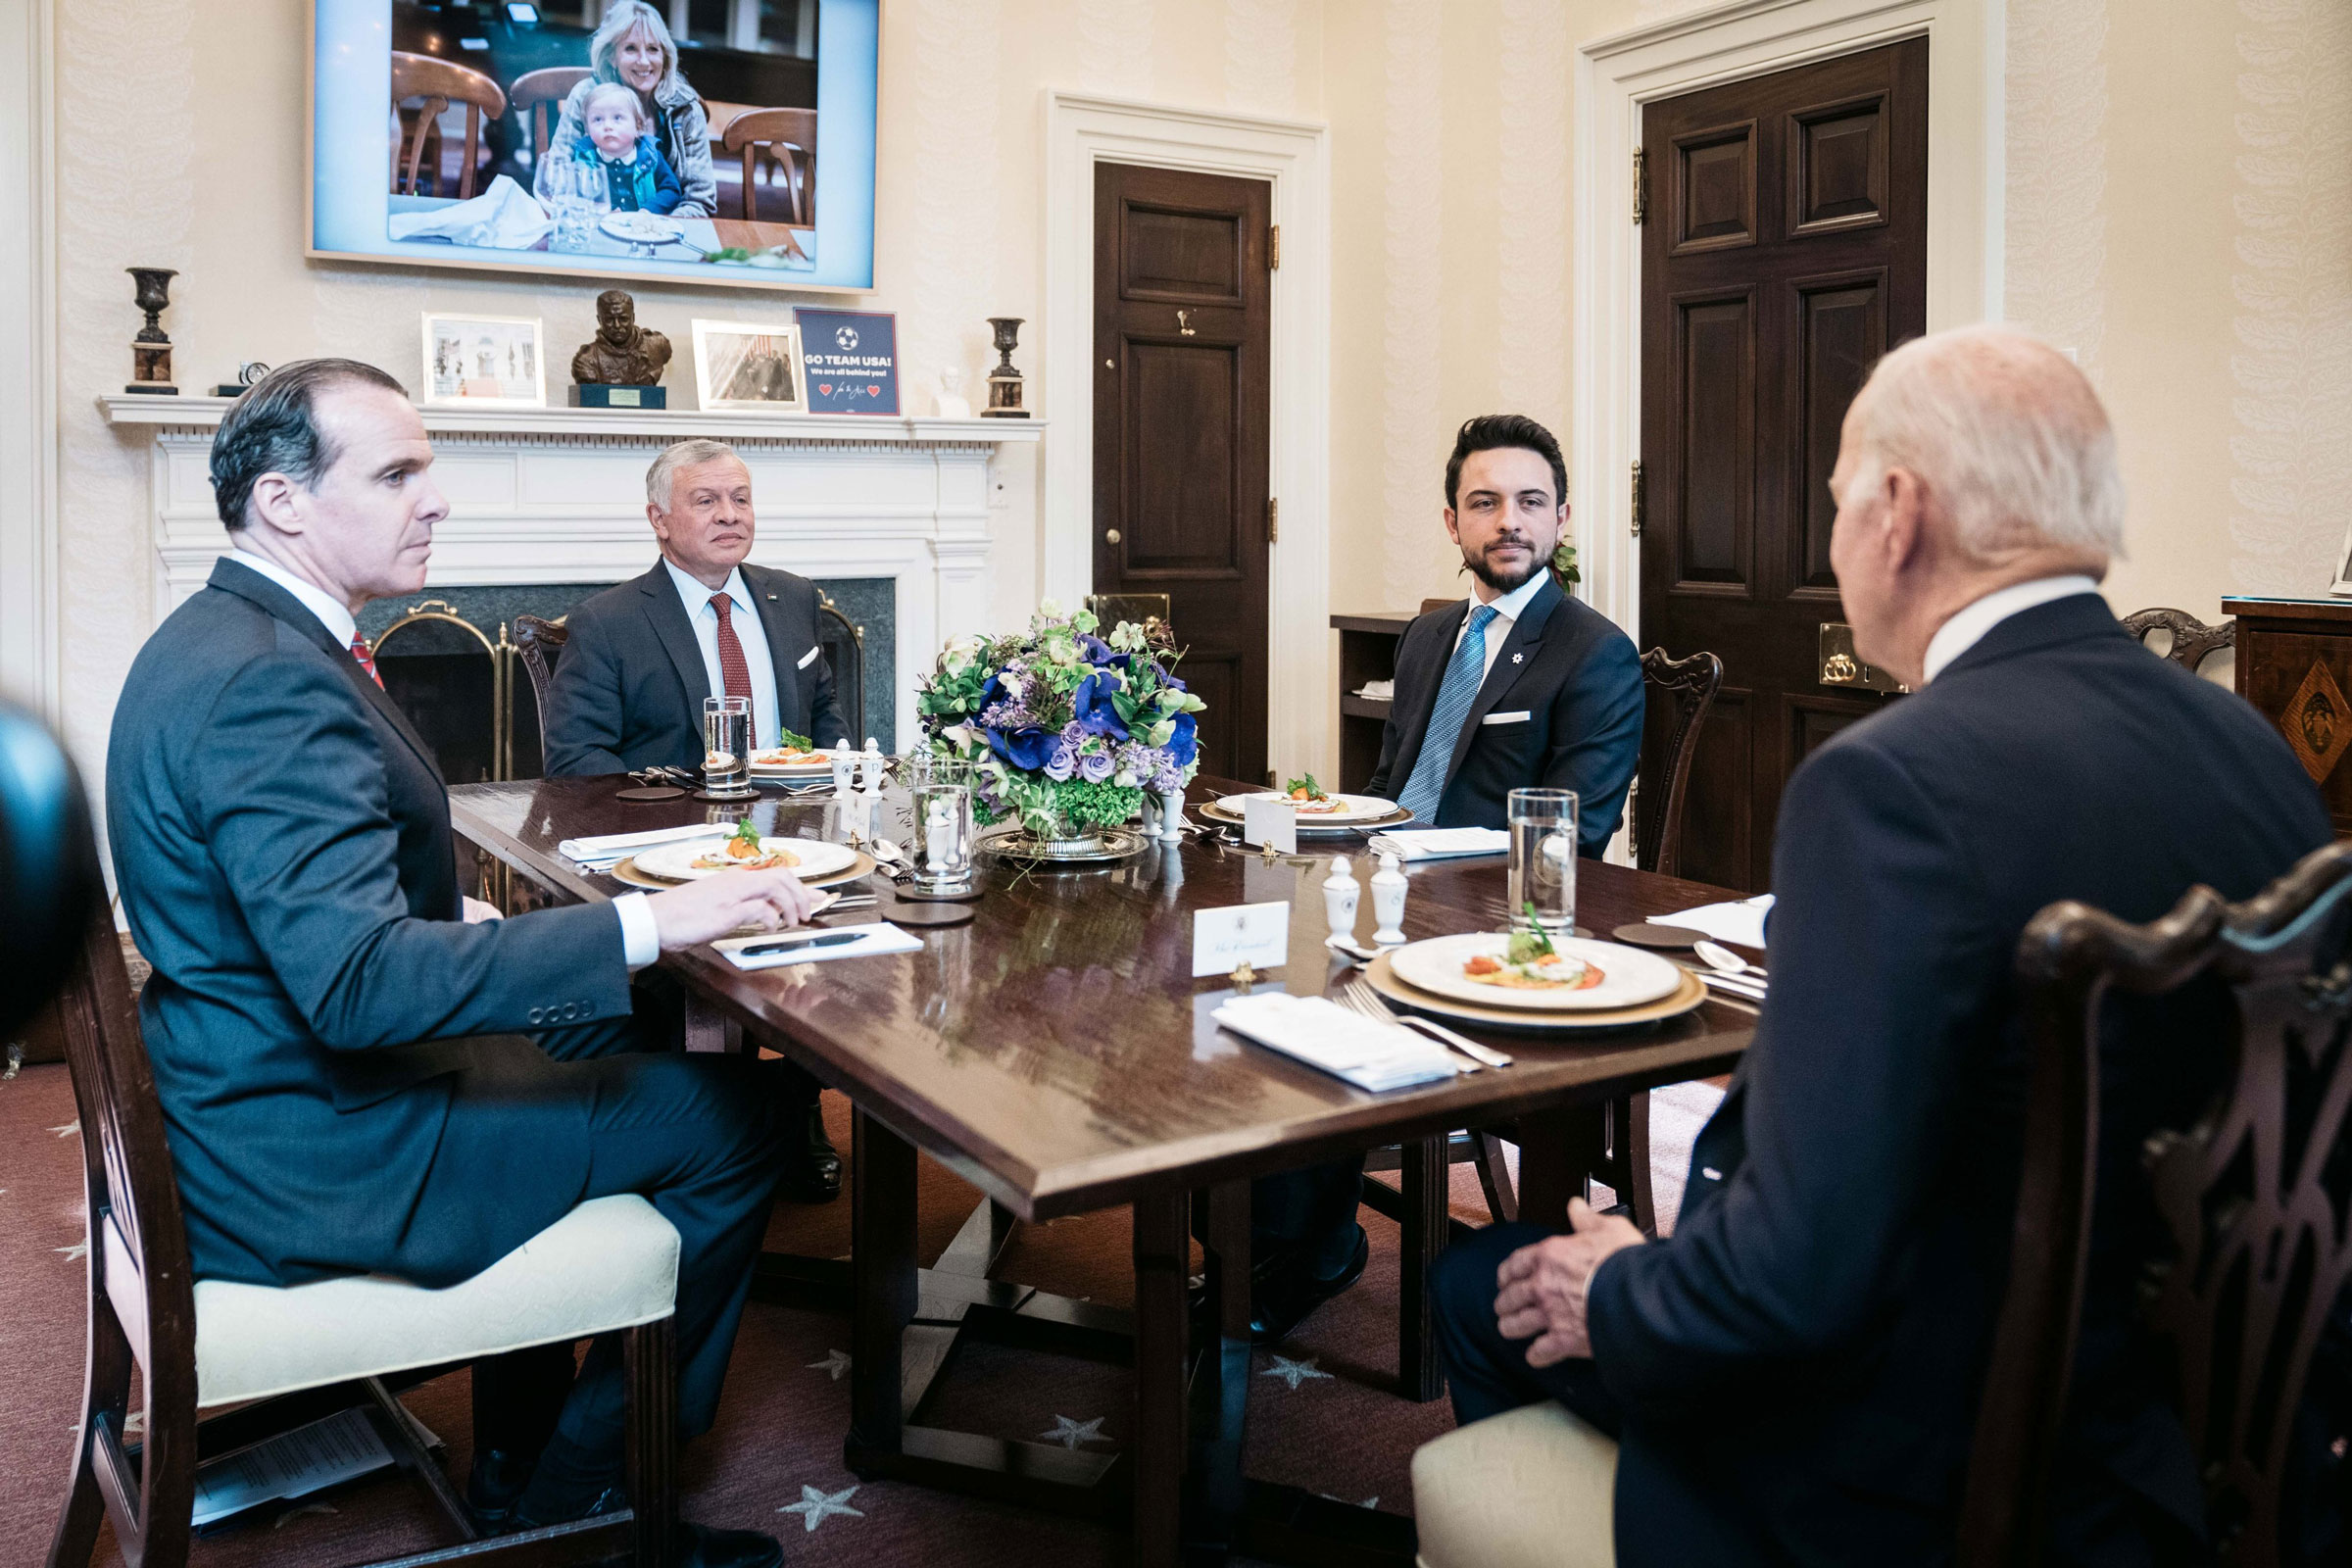 King of Jordan Abdullah II and Crown Prince Hussein bin Abdullah of Jordan meet with U.S. President Joe Biden